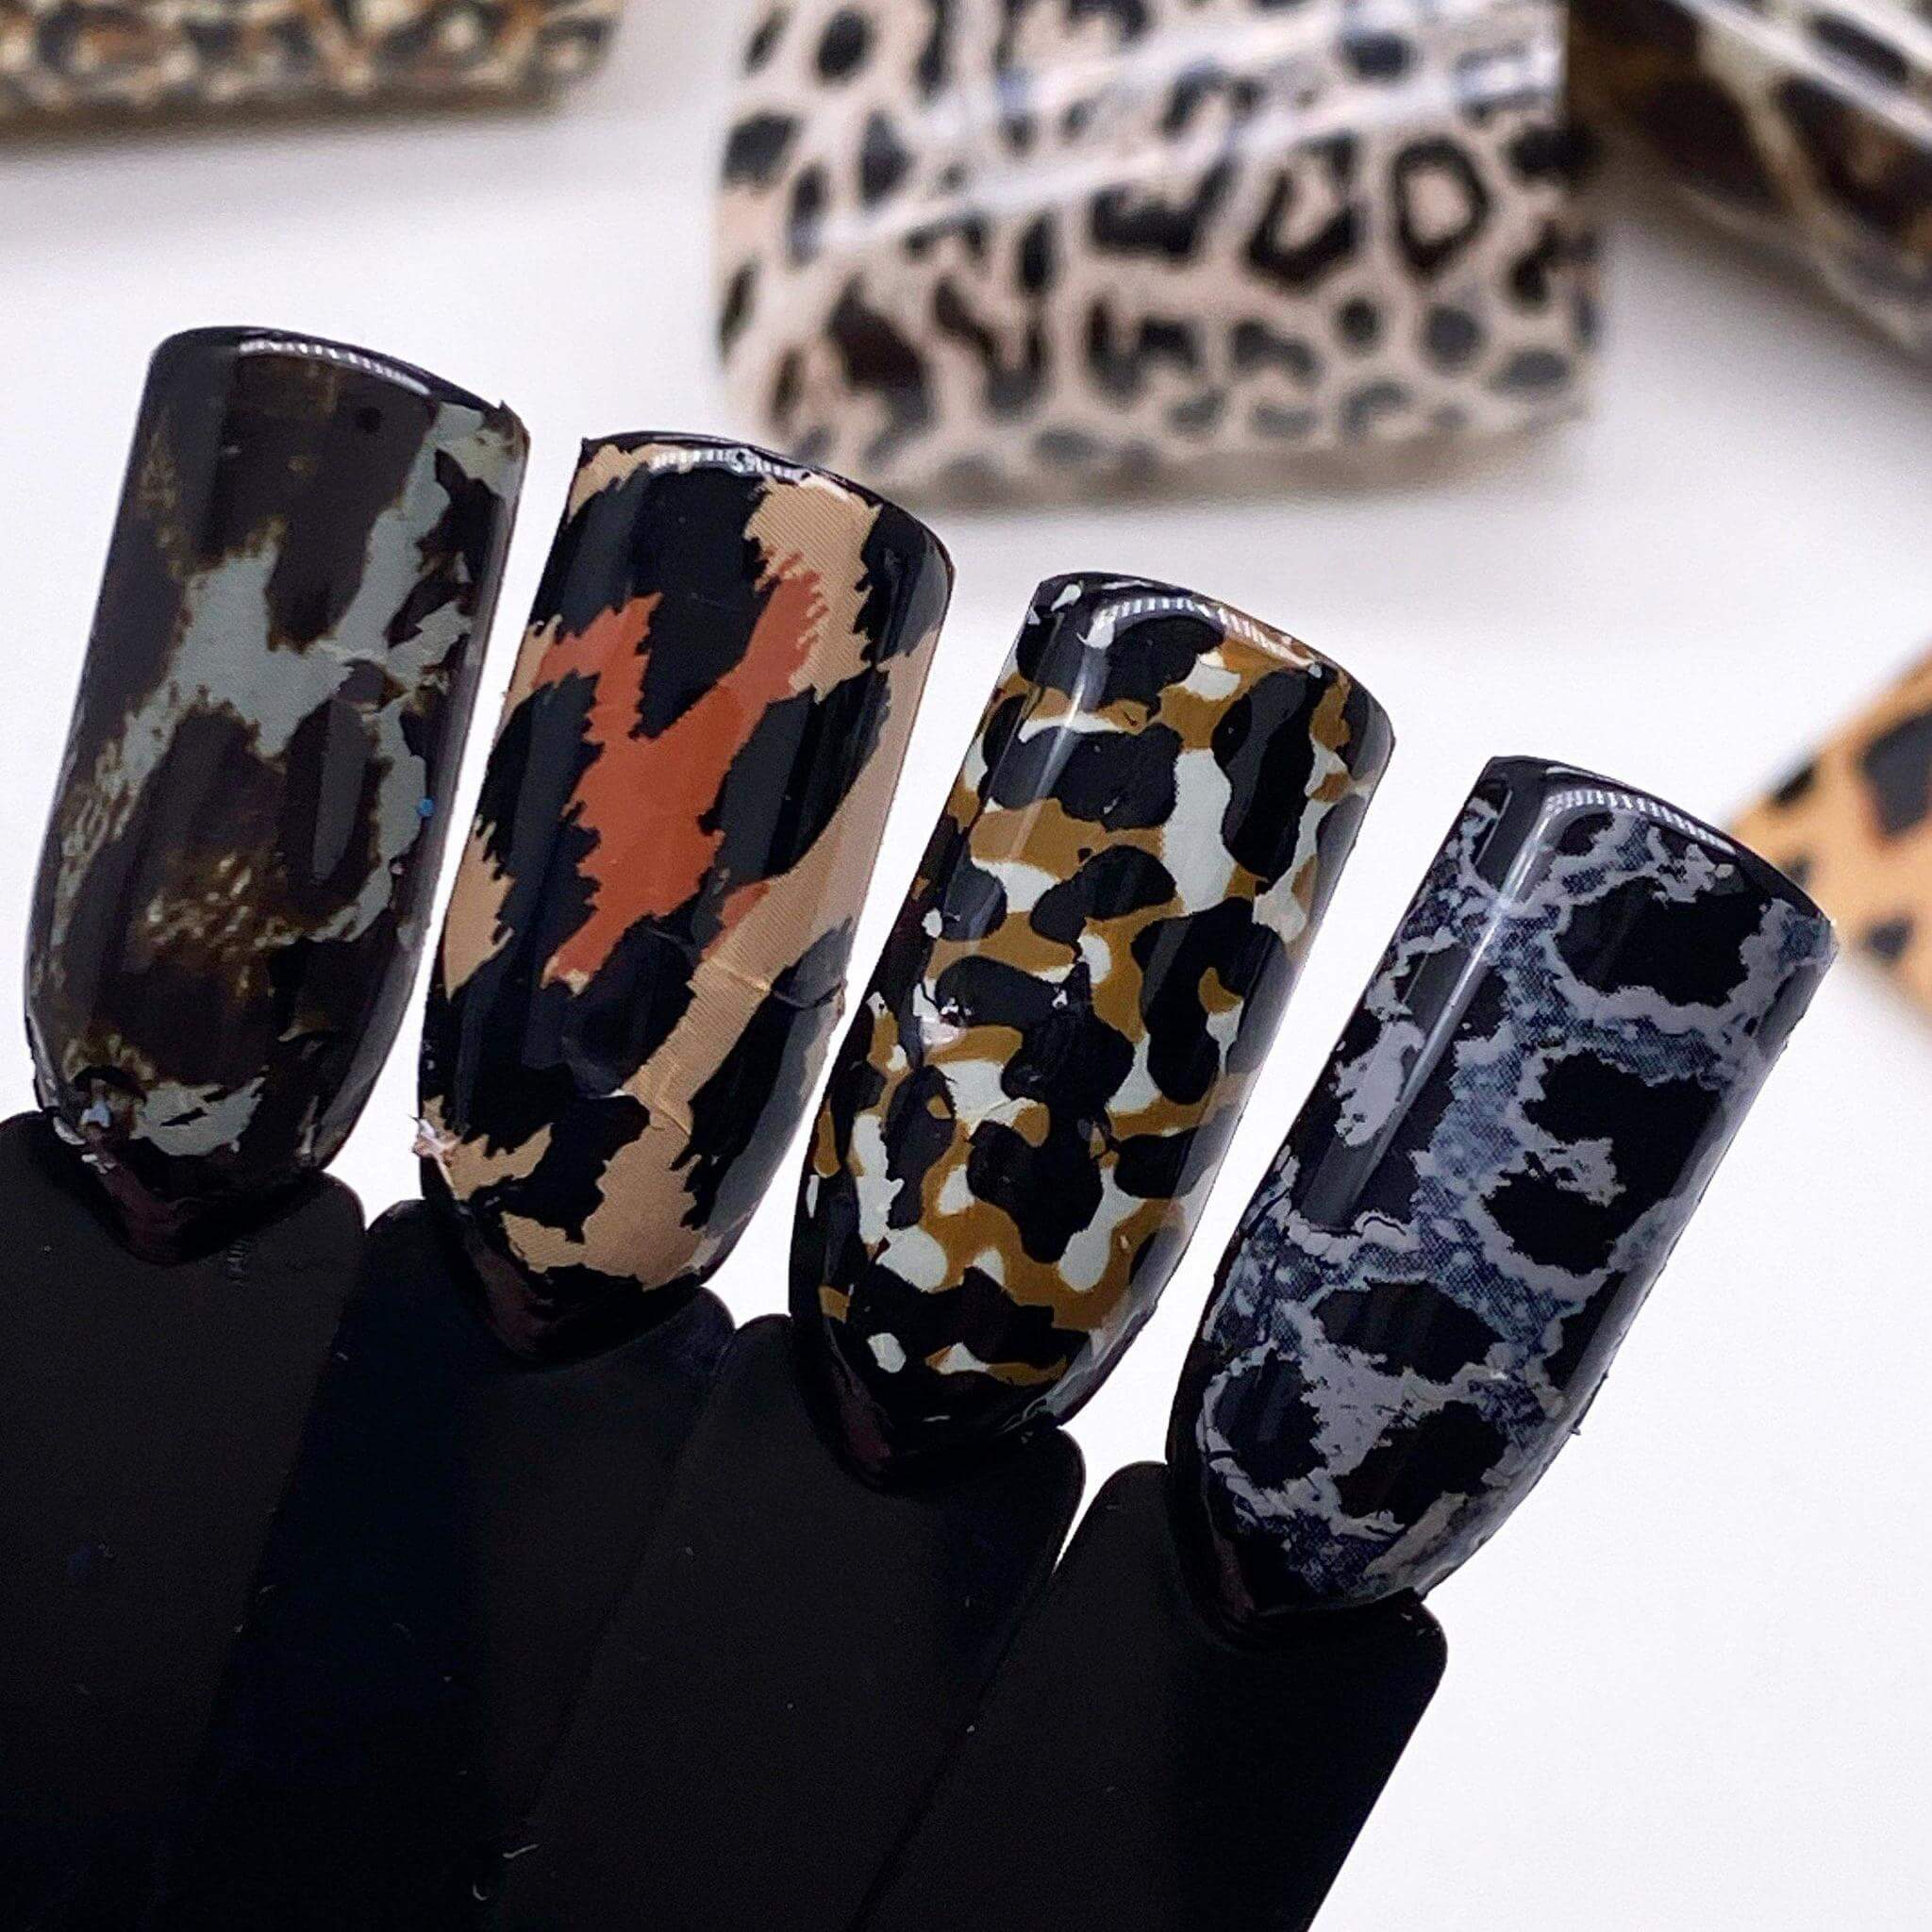 Leopard nails step by step – Le Mini Macaron